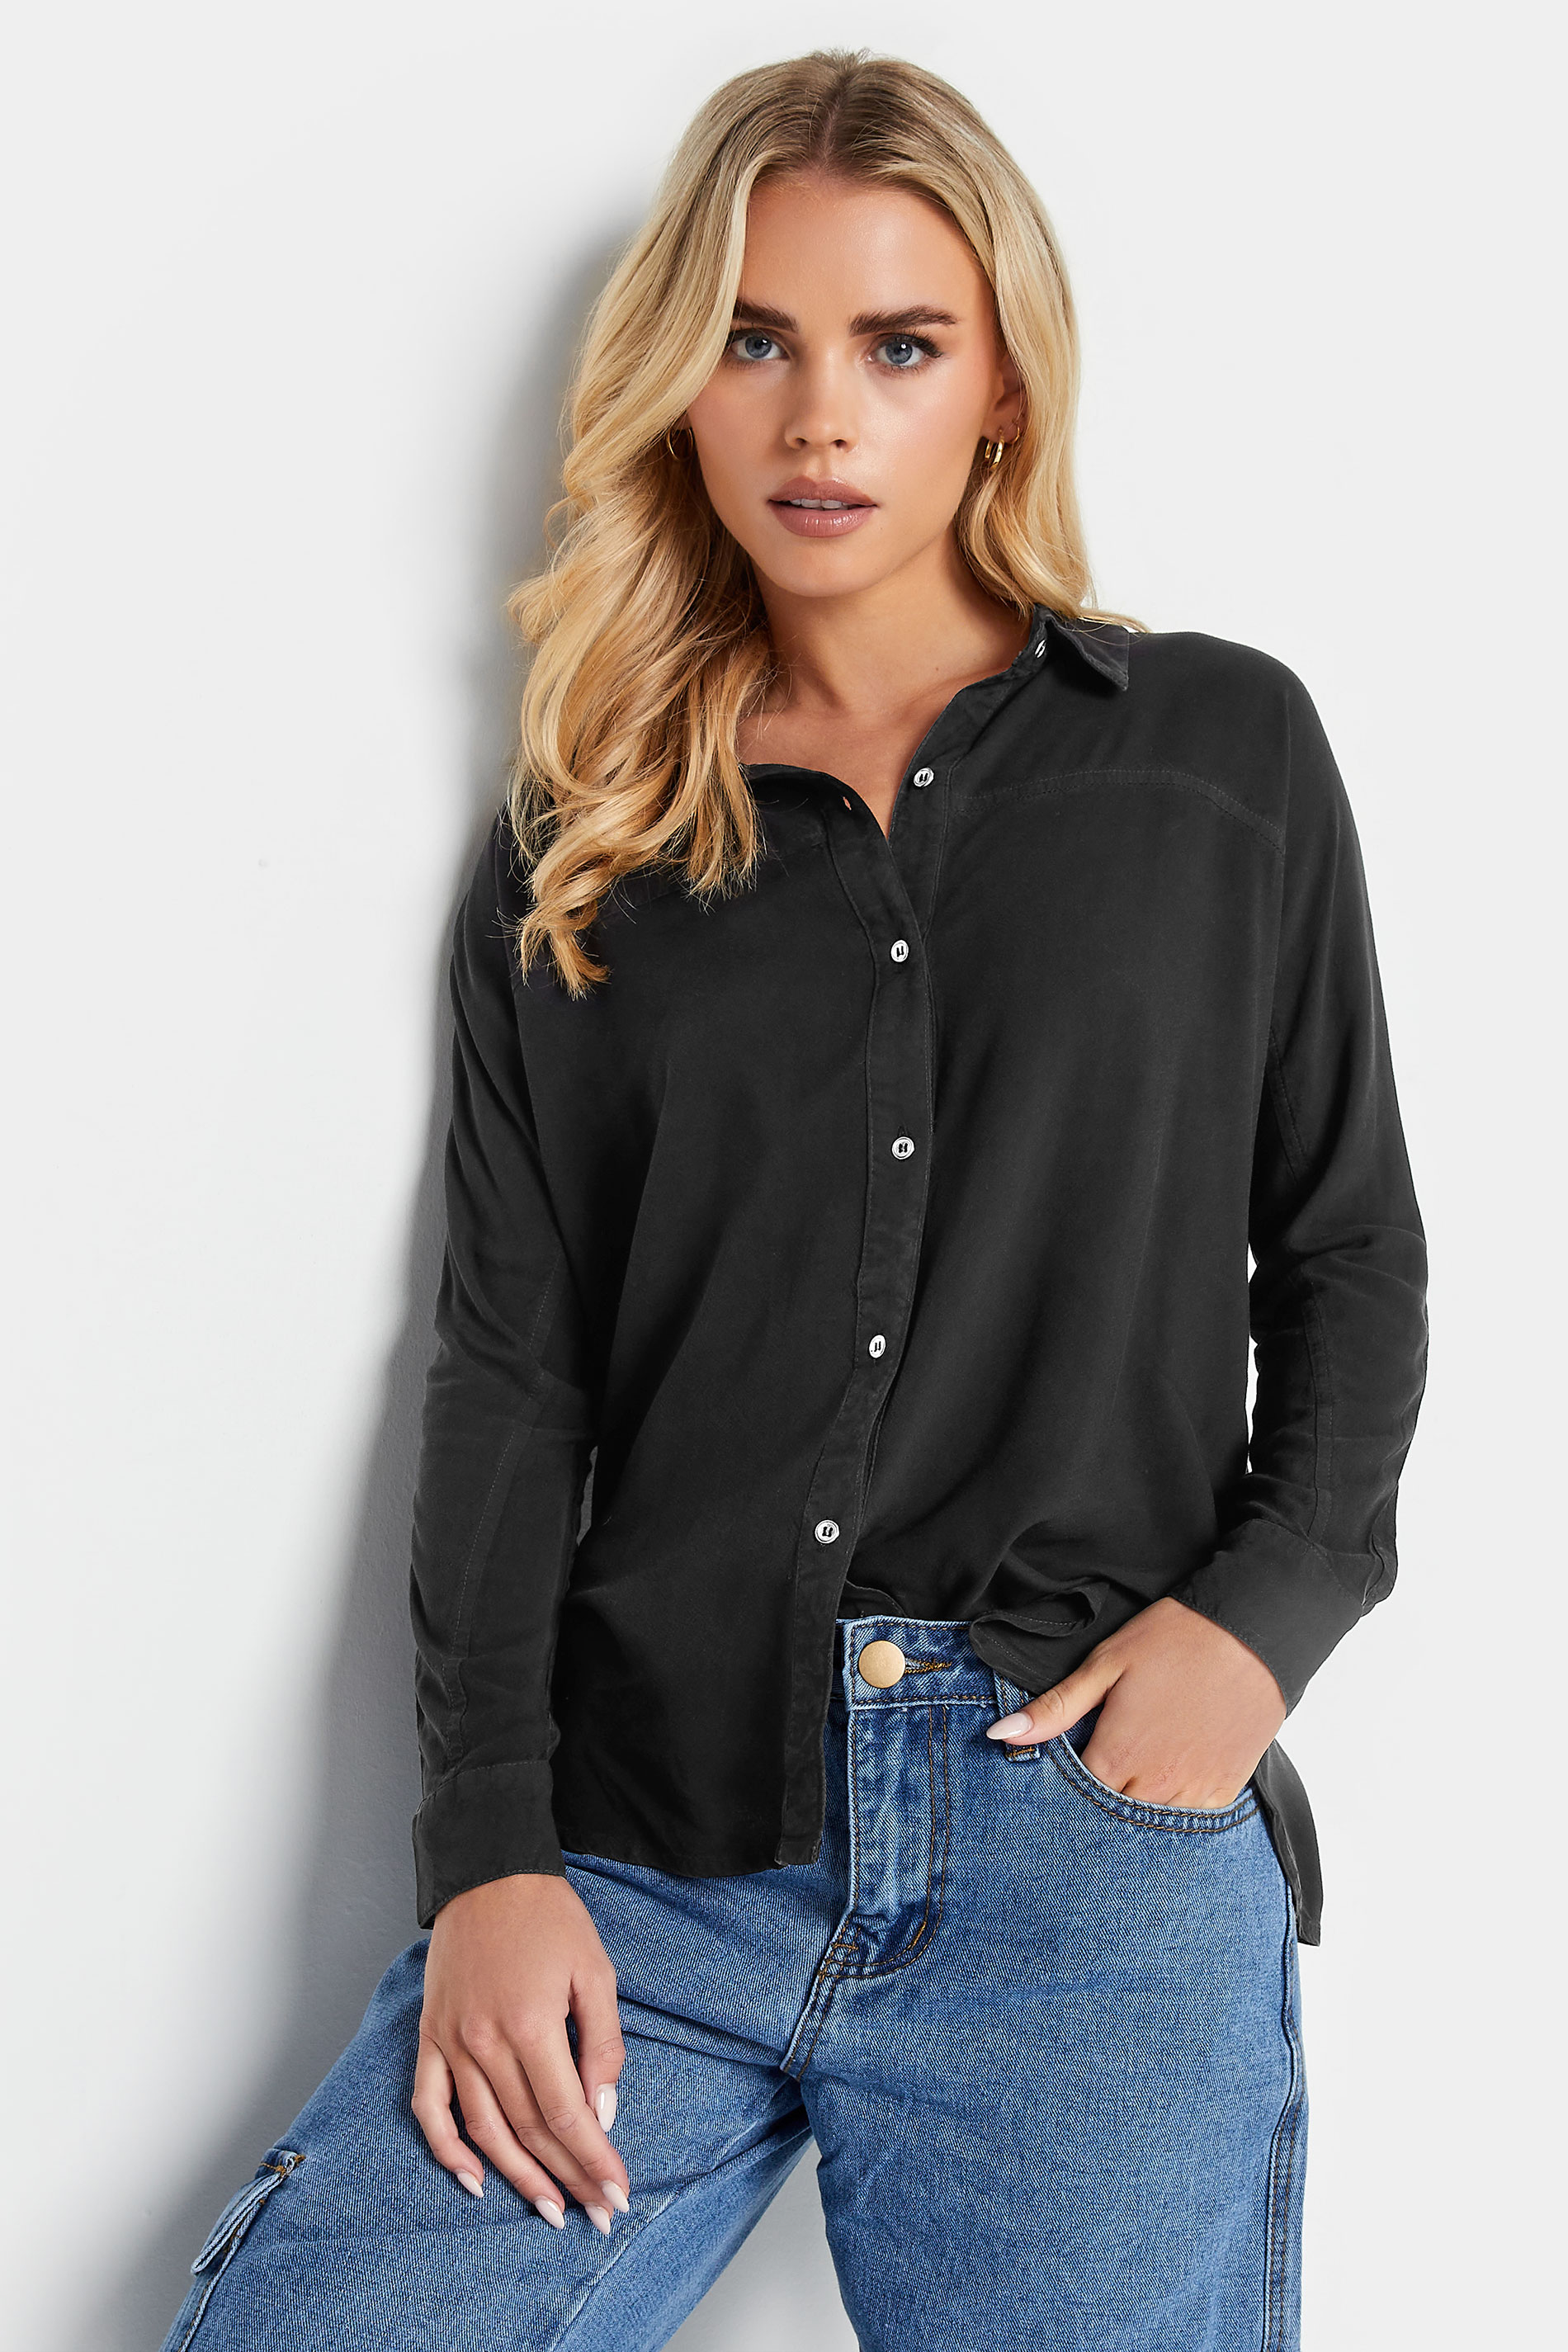 PixieGirl Black Long Sleeve Shirt | PixieGirl  1